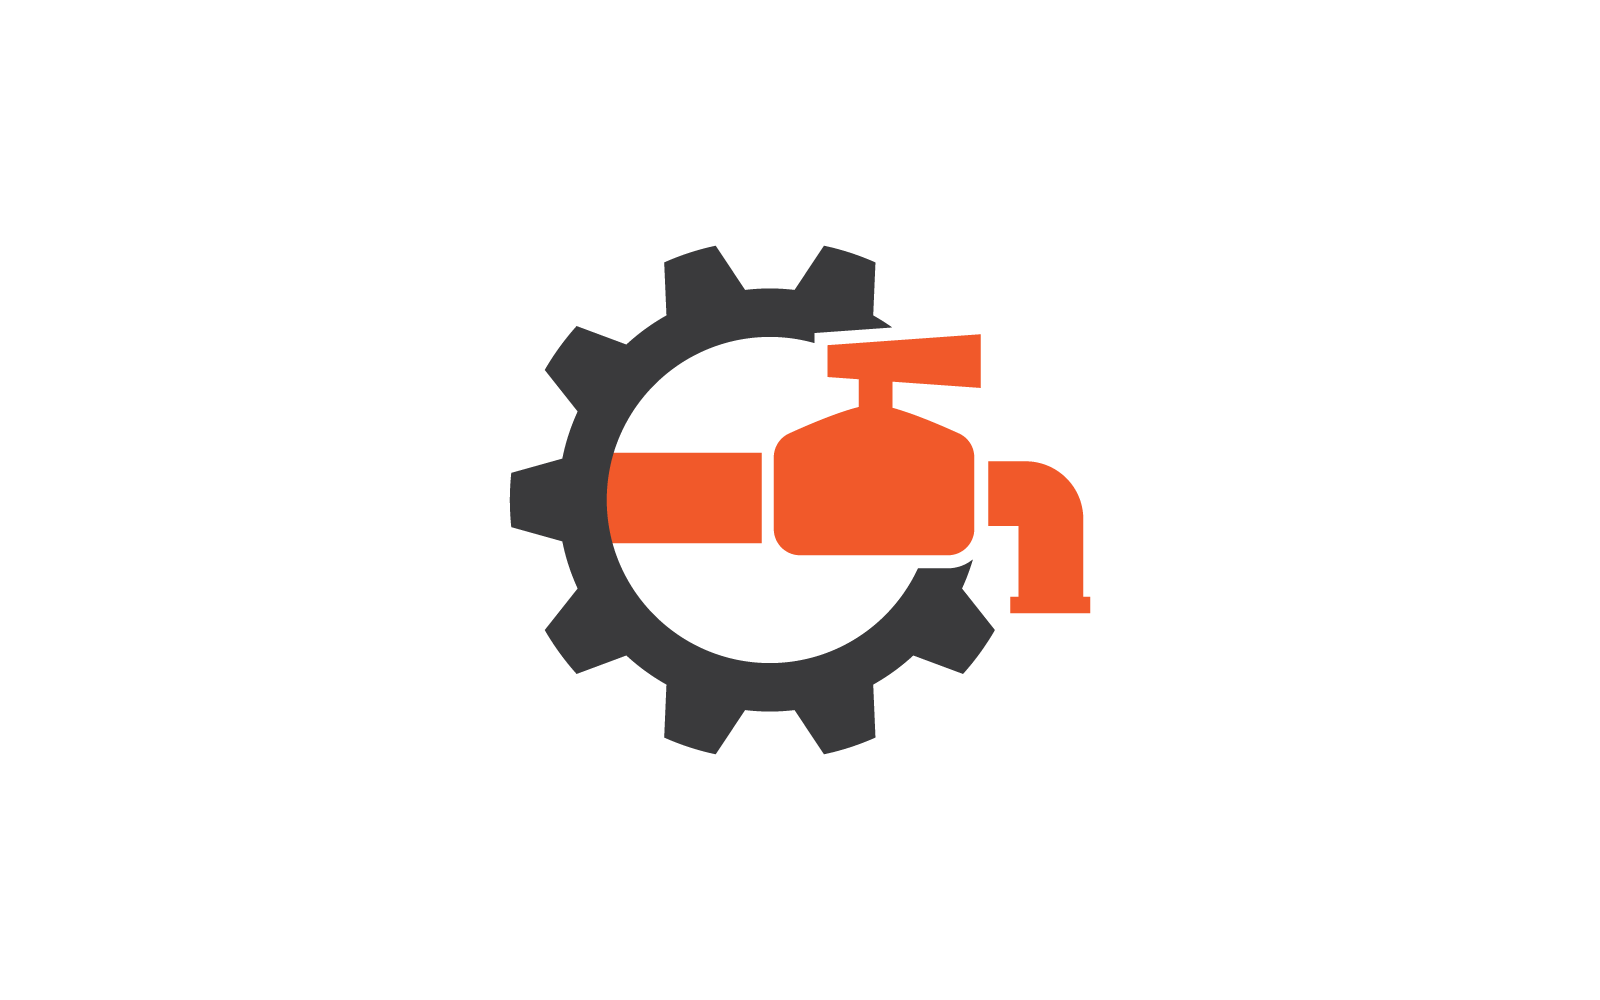 Plumbing design logo vector flat design business template